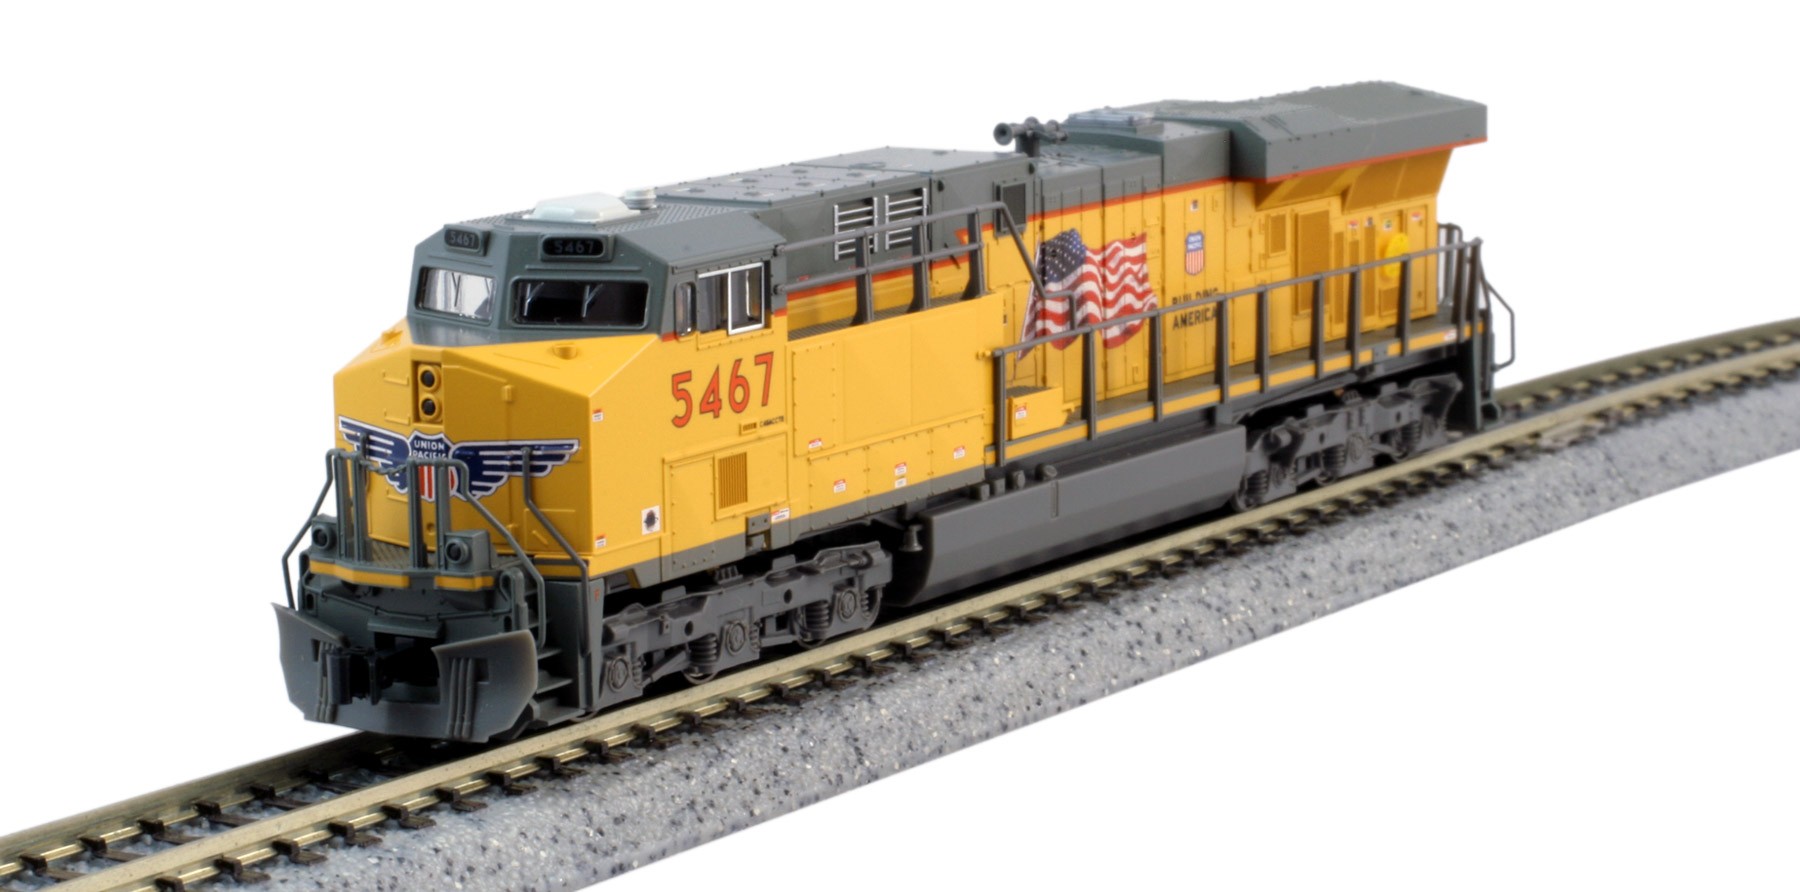 Kato N - Locomotiva GE ES44AC Union Pacific #5467: 176-8933